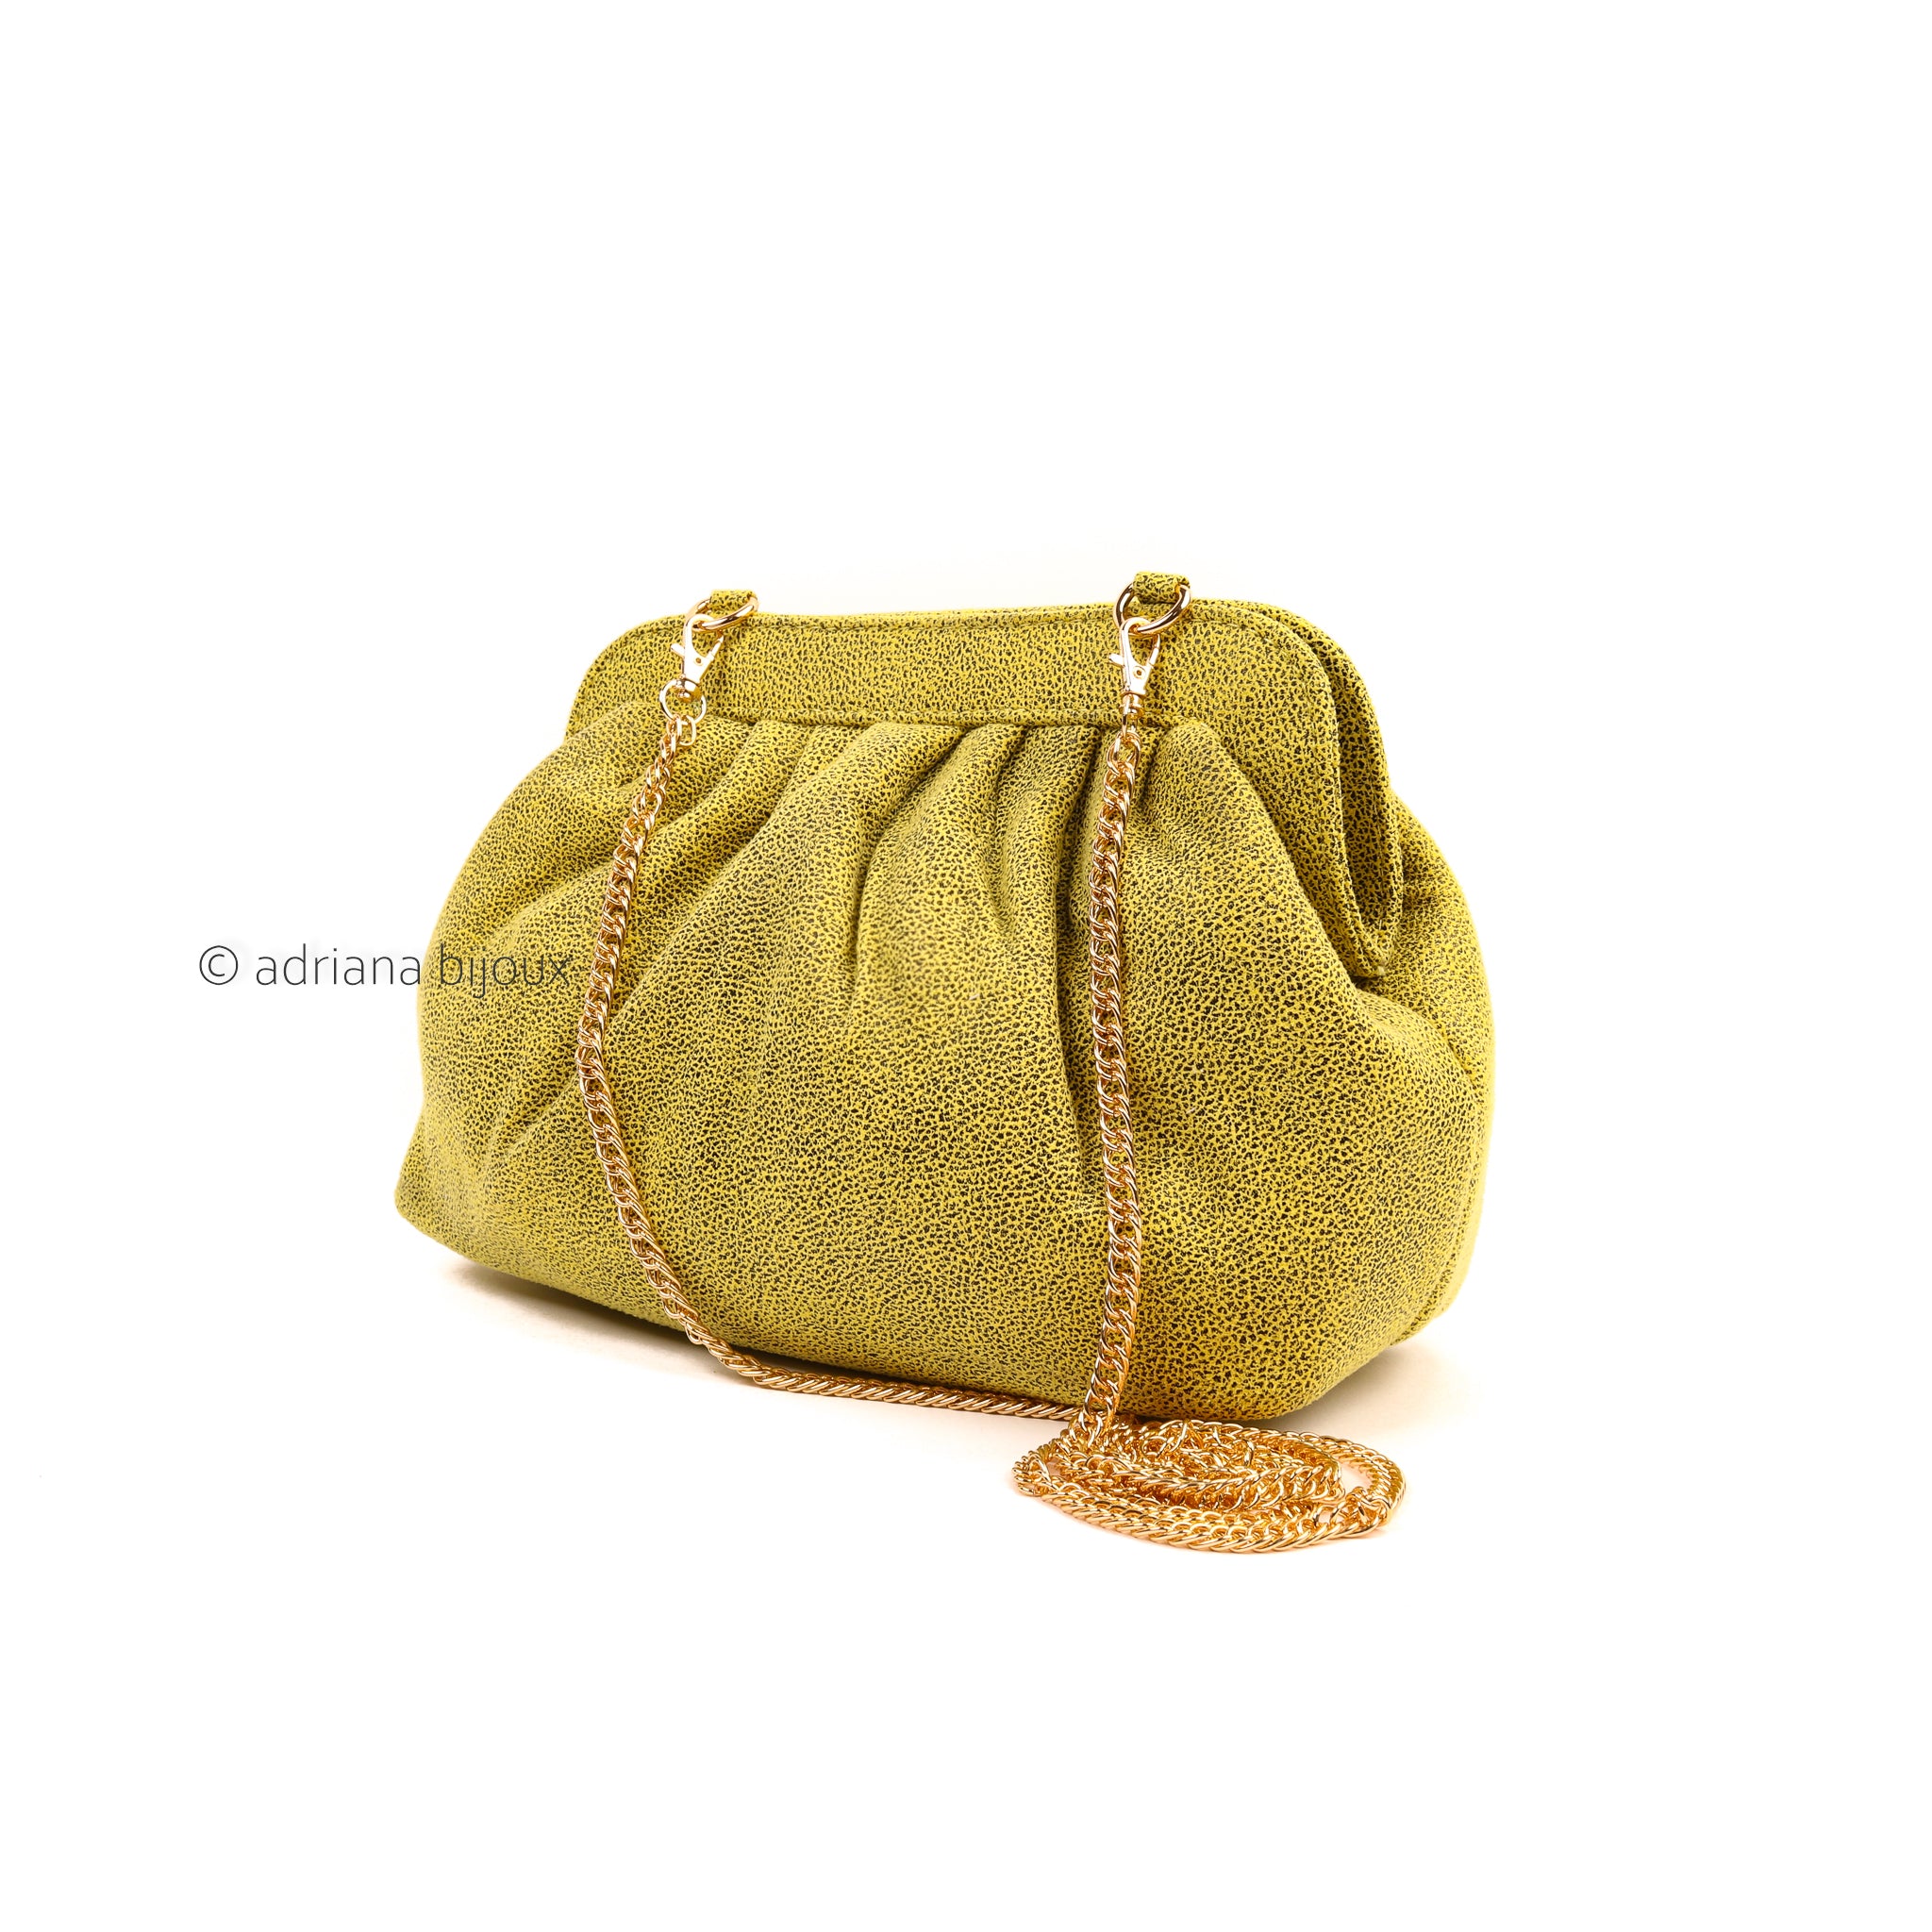 Estrella Medium bucket bag colorblock in sand/ash/gold/mustard